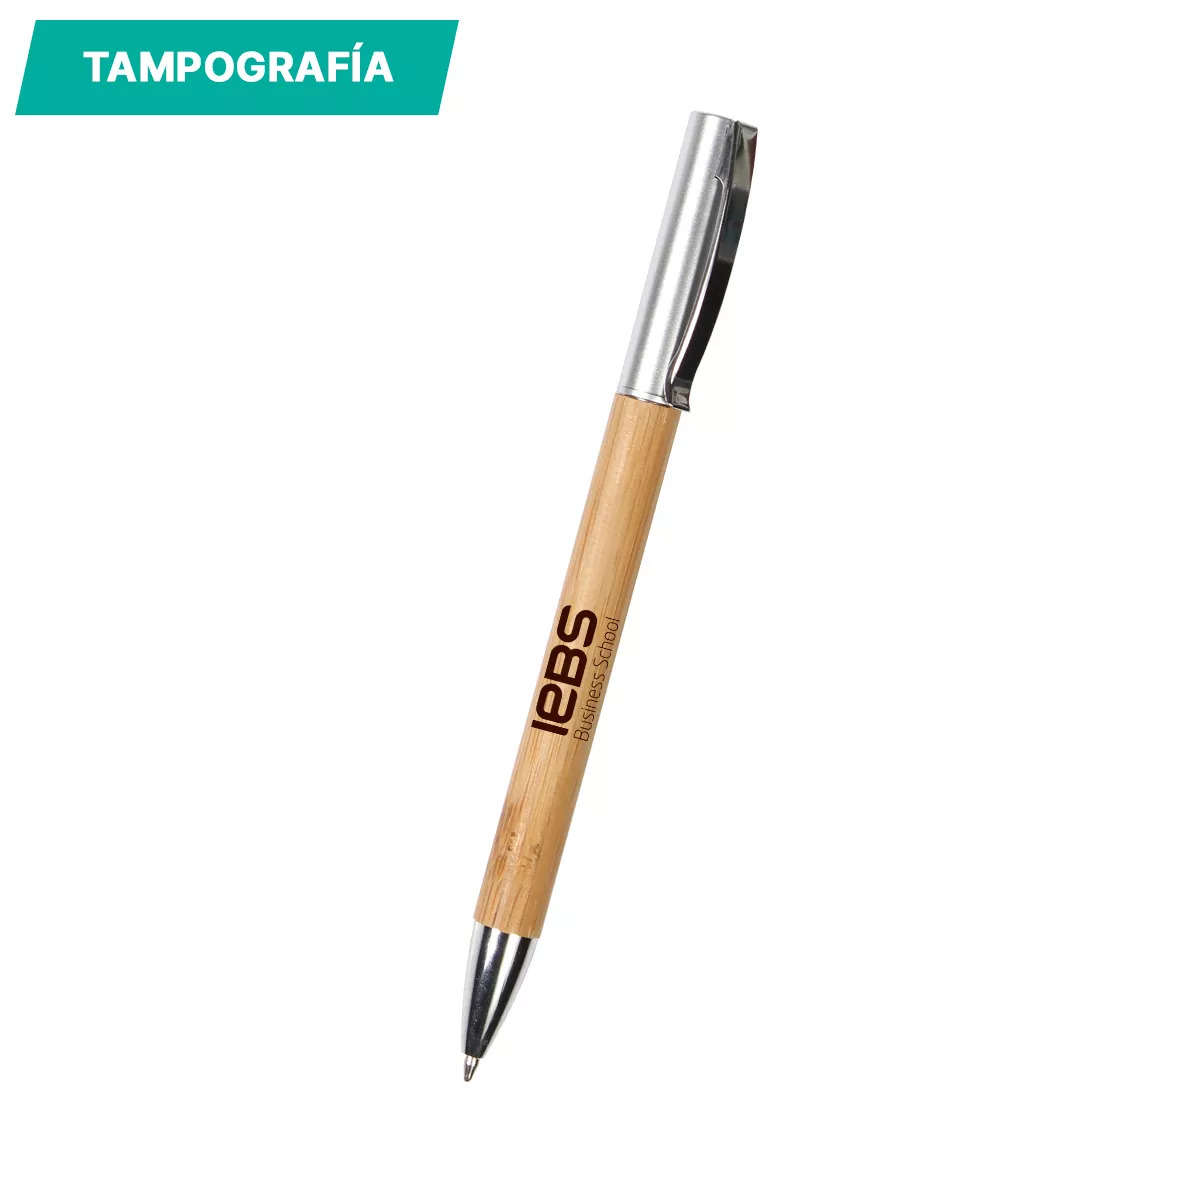 BL-133 Bolígrafo de bambú Lorca. BAMBÚ